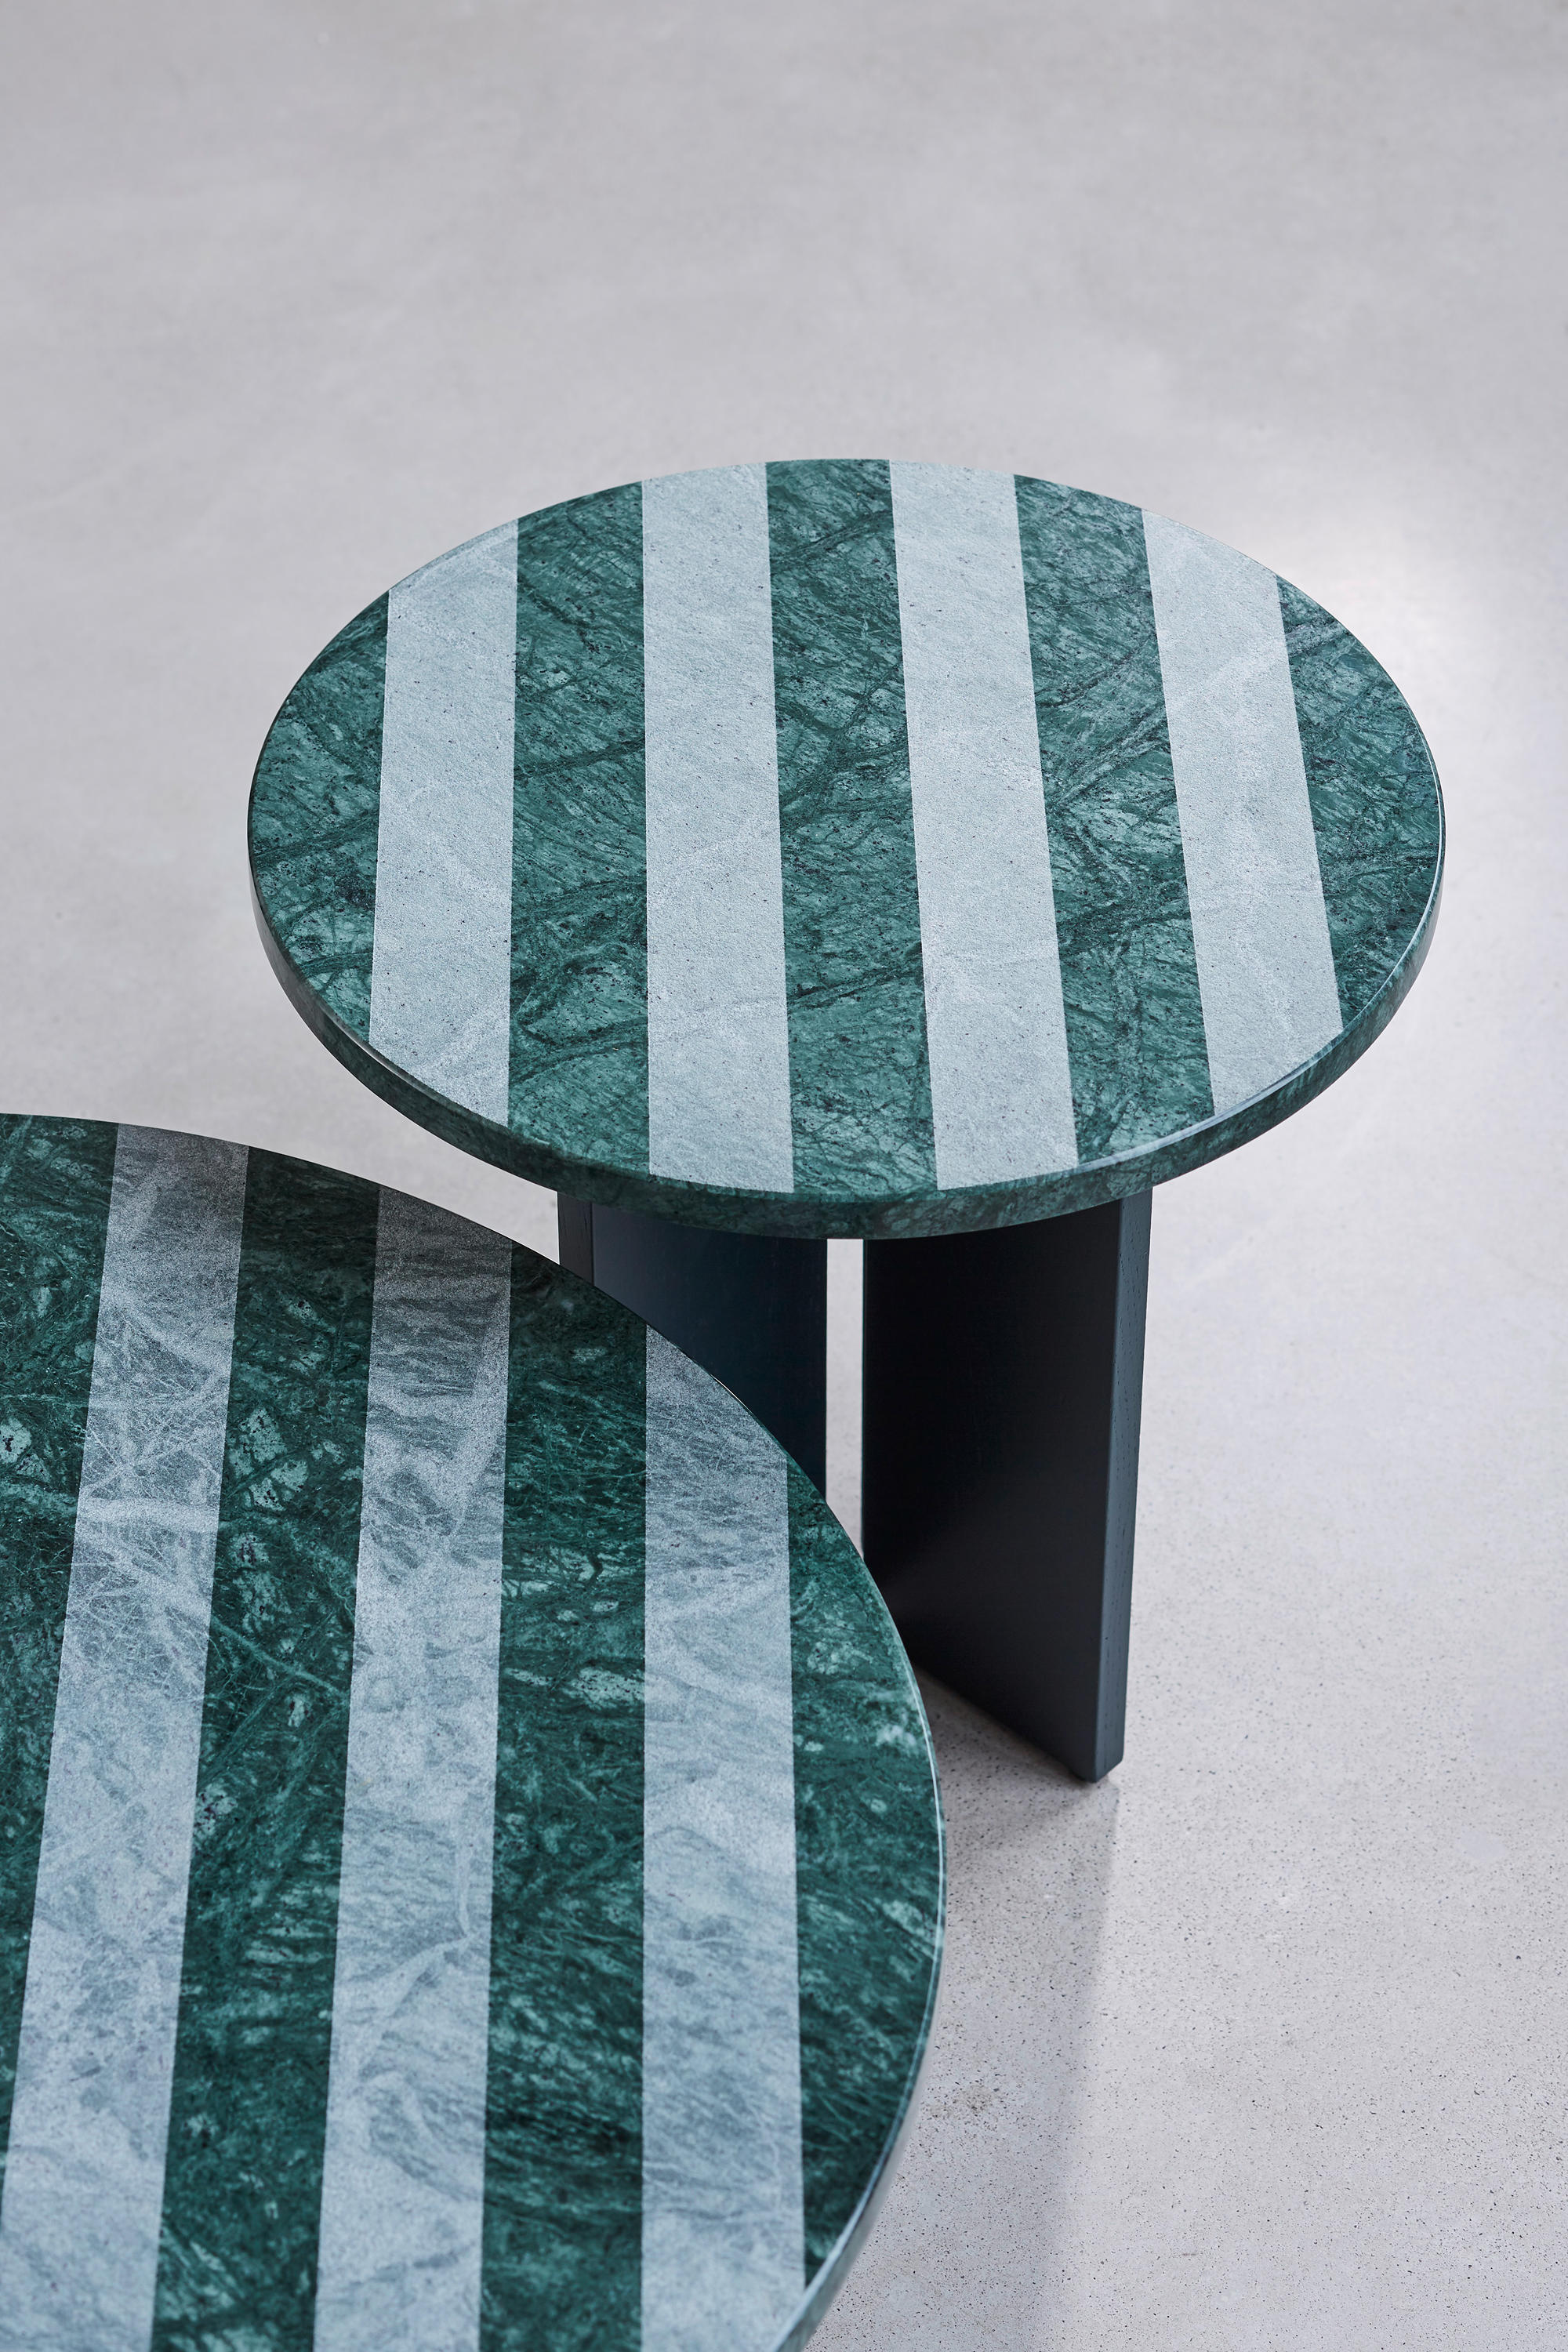 Sediment Tables by Studio Besau Marguerre for Favius